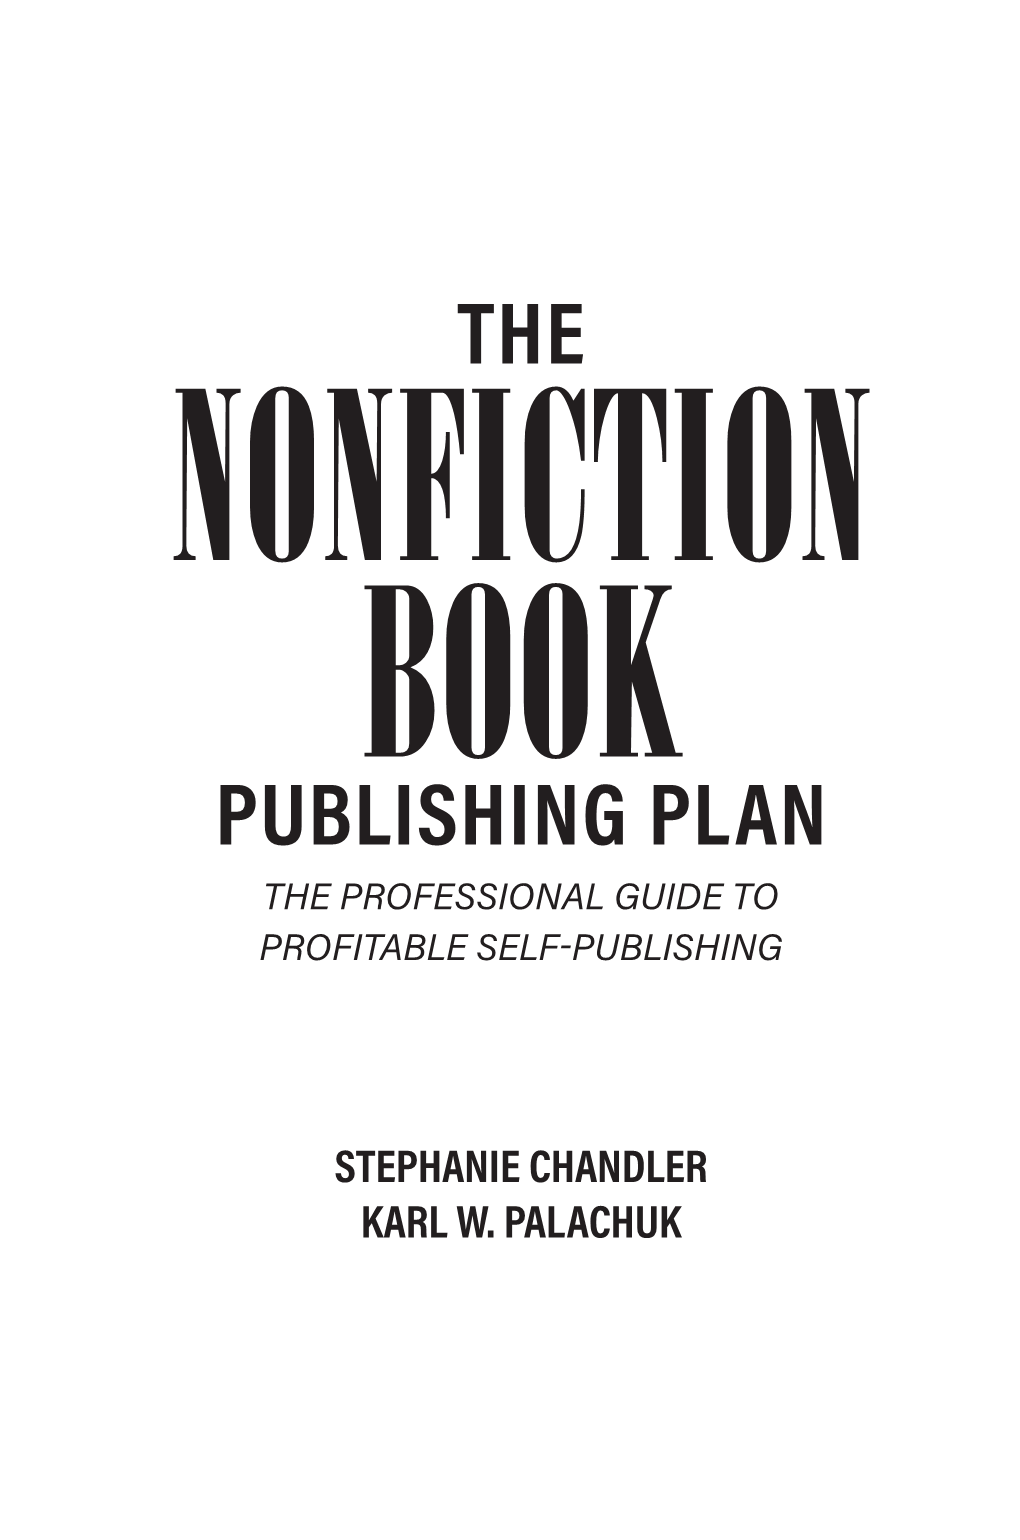 The Publishing Plan